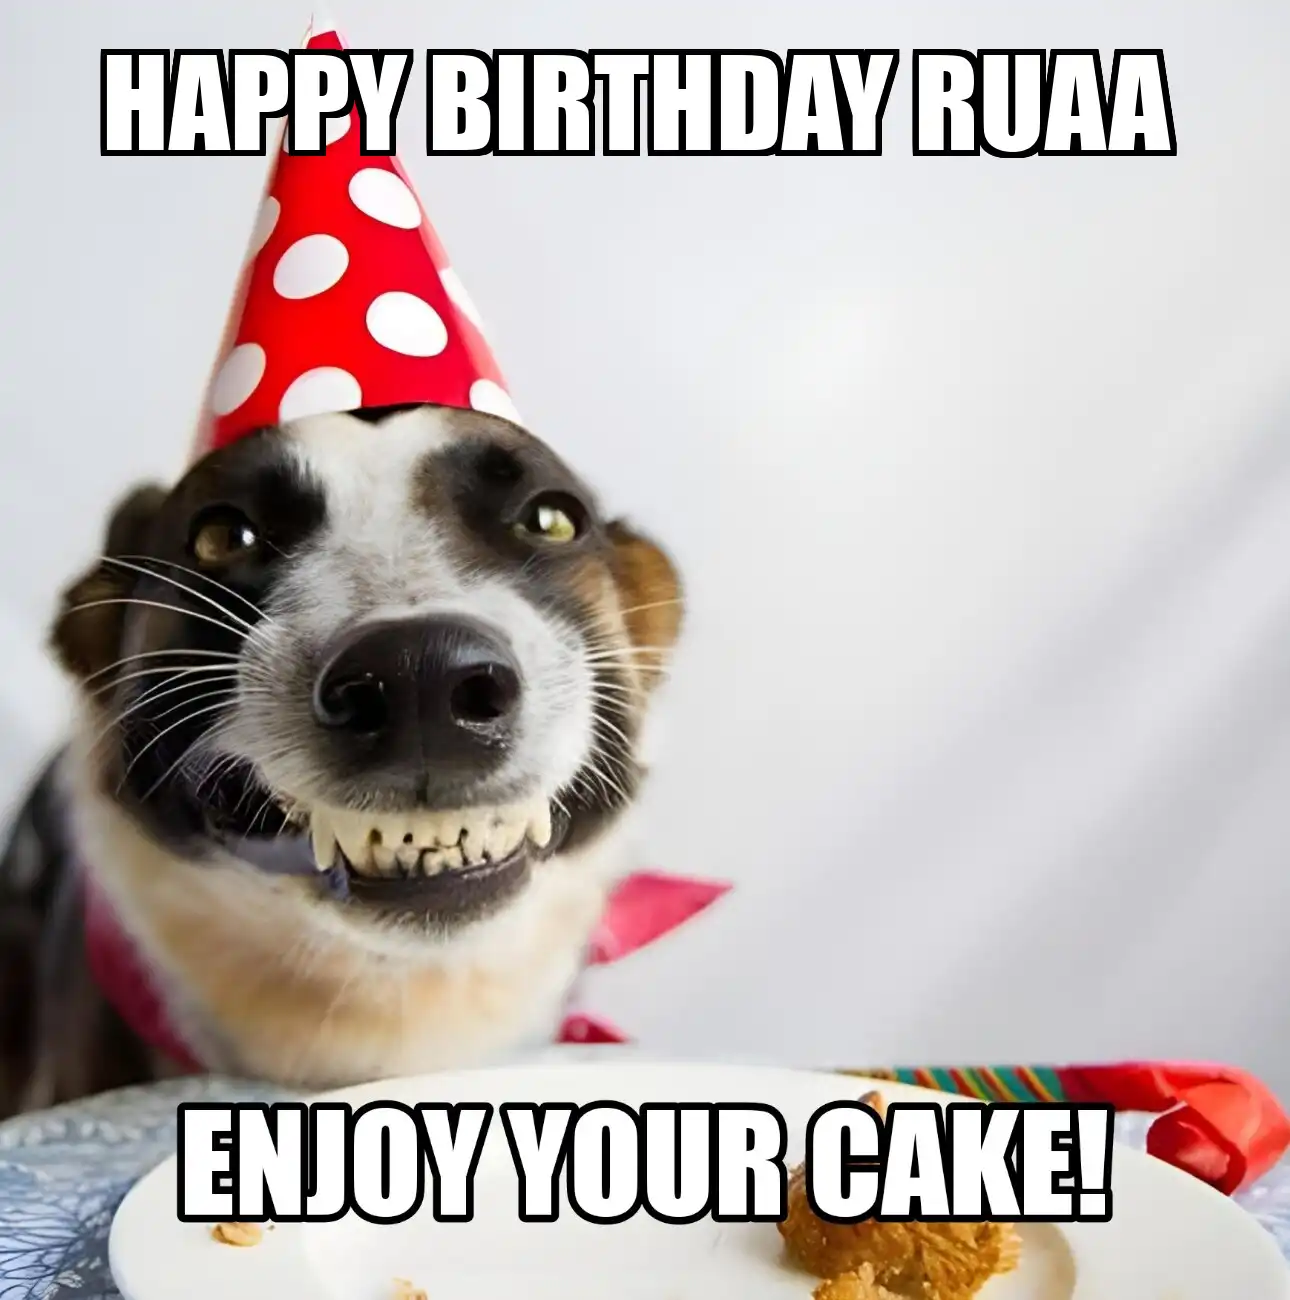 Happy Birthday Ruaa Enjoy Your Cake Dog Meme